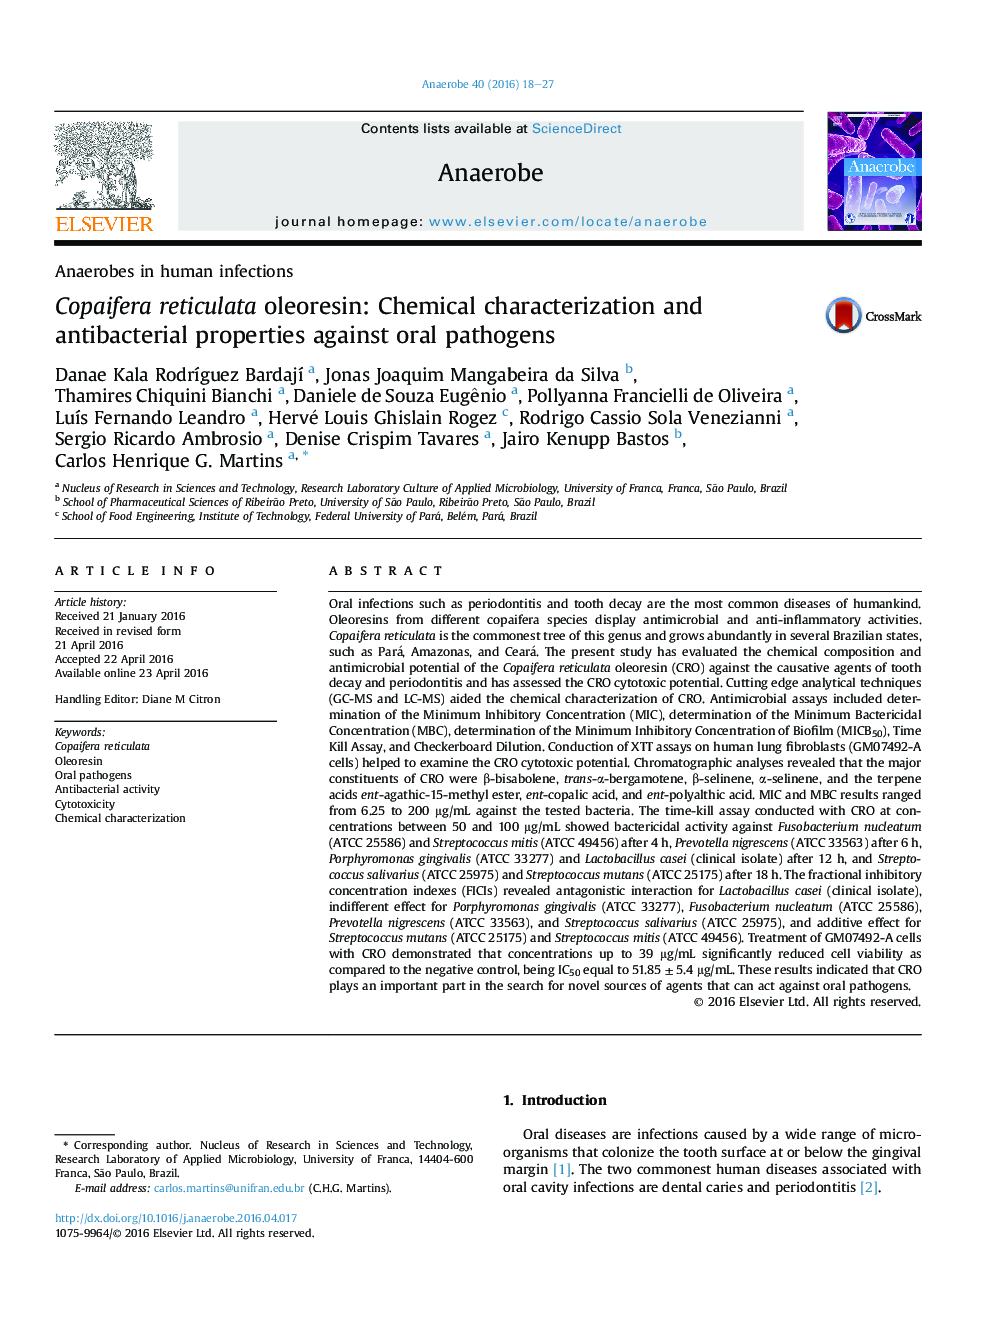 Copaifera reticulata oleoresin: Chemical characterization and antibacterial properties against oral pathogens